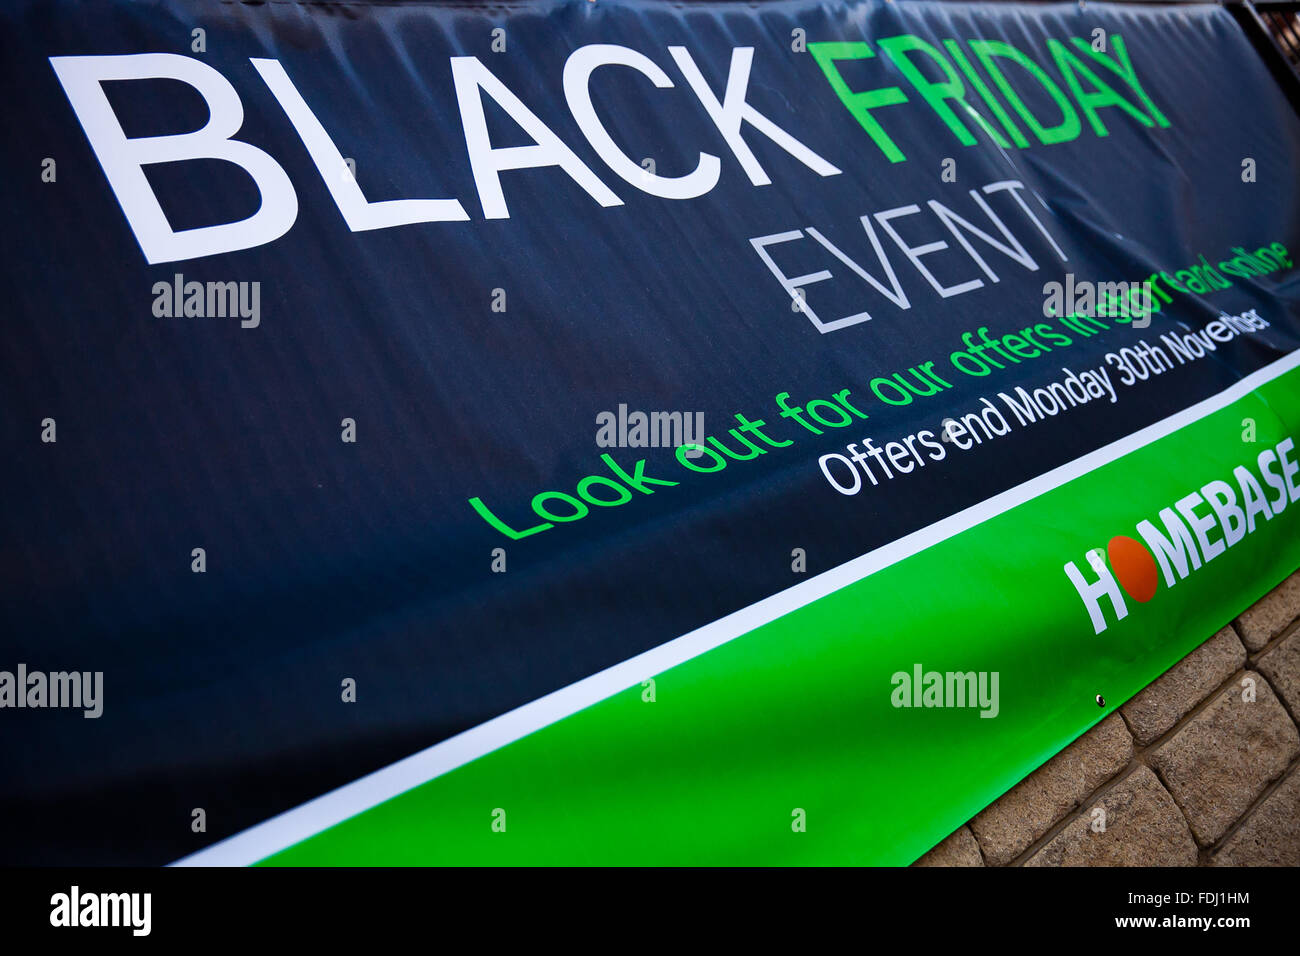 London, UK. 27th November, 2015. Black Friday banner outside Homebase in North London Stock Photo